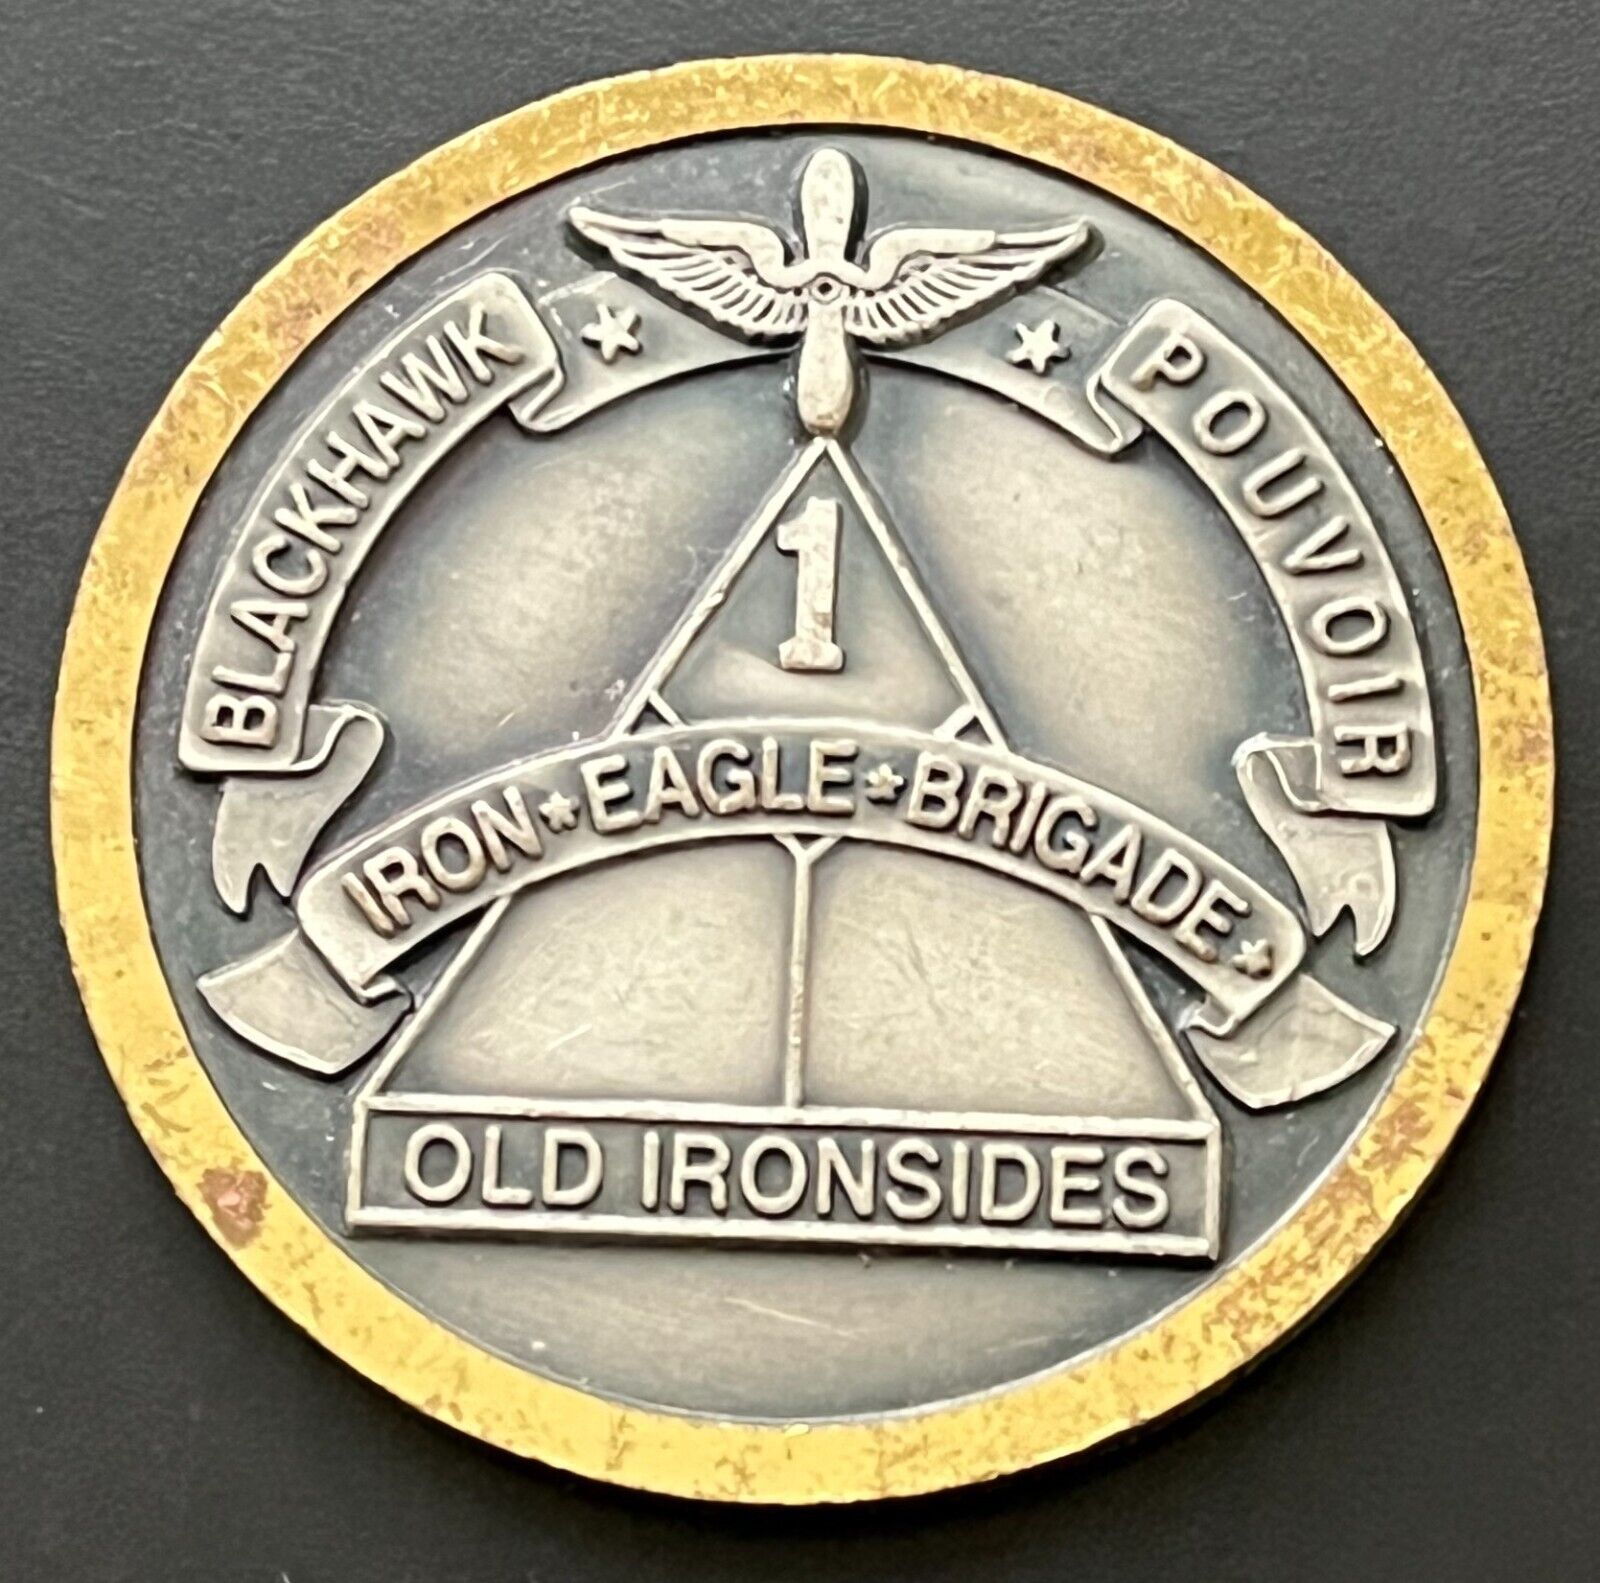 Blackhawk Pouvoir Iron Eagle Brigade Old Ironsides Challenge Coin Medal Token